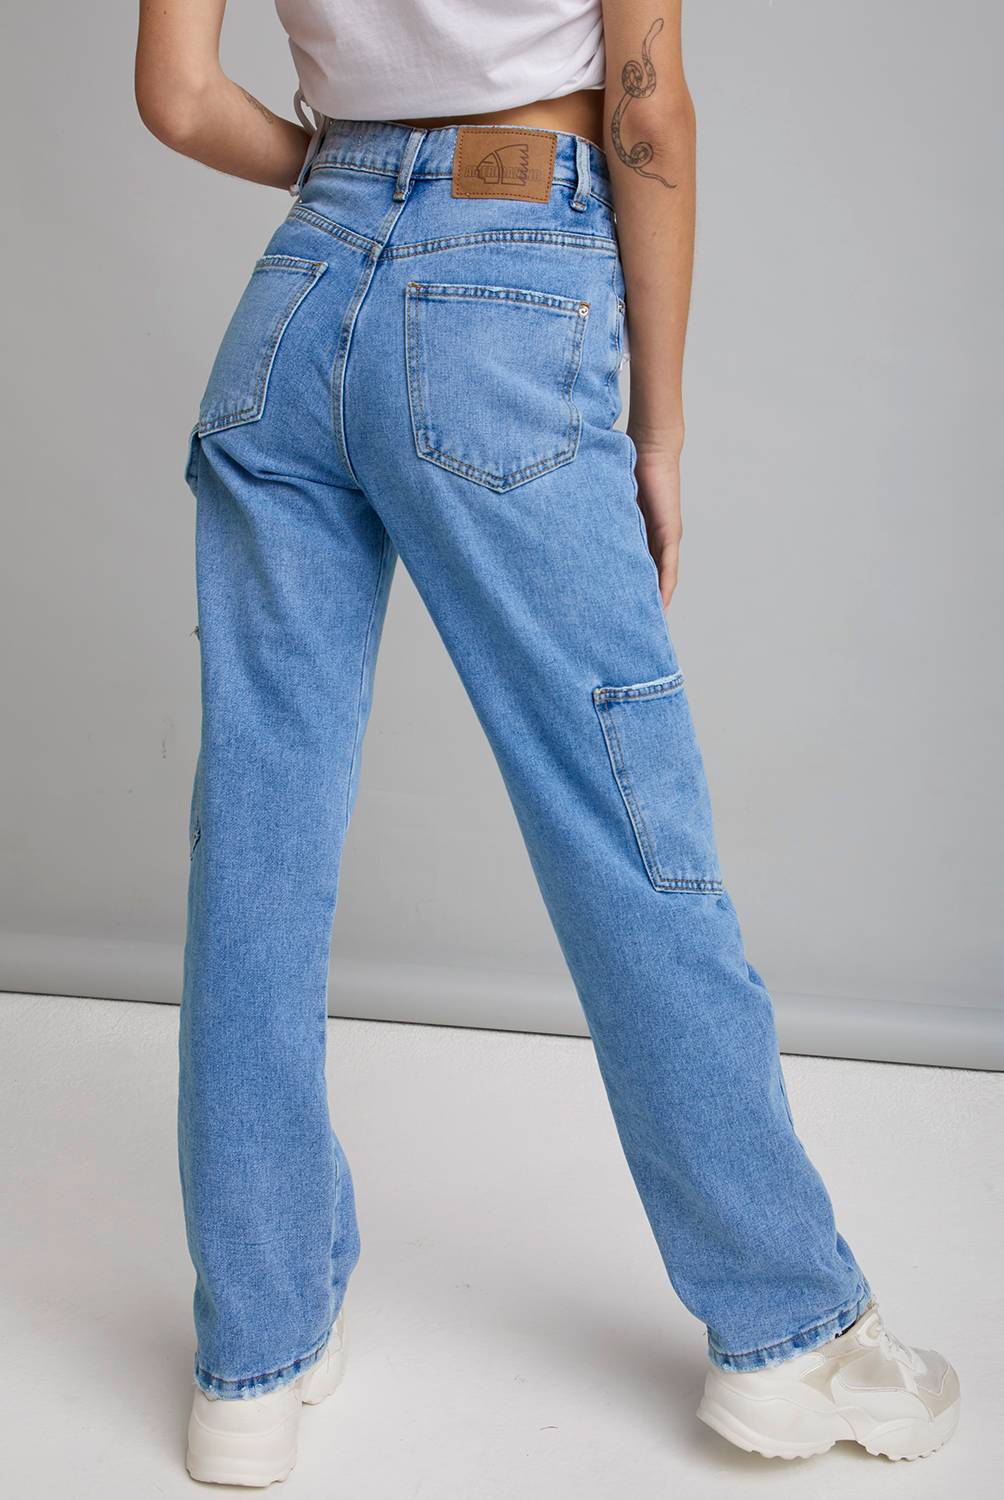 AMERICANINO - Jeans Cargo Tiro Alto Mujer